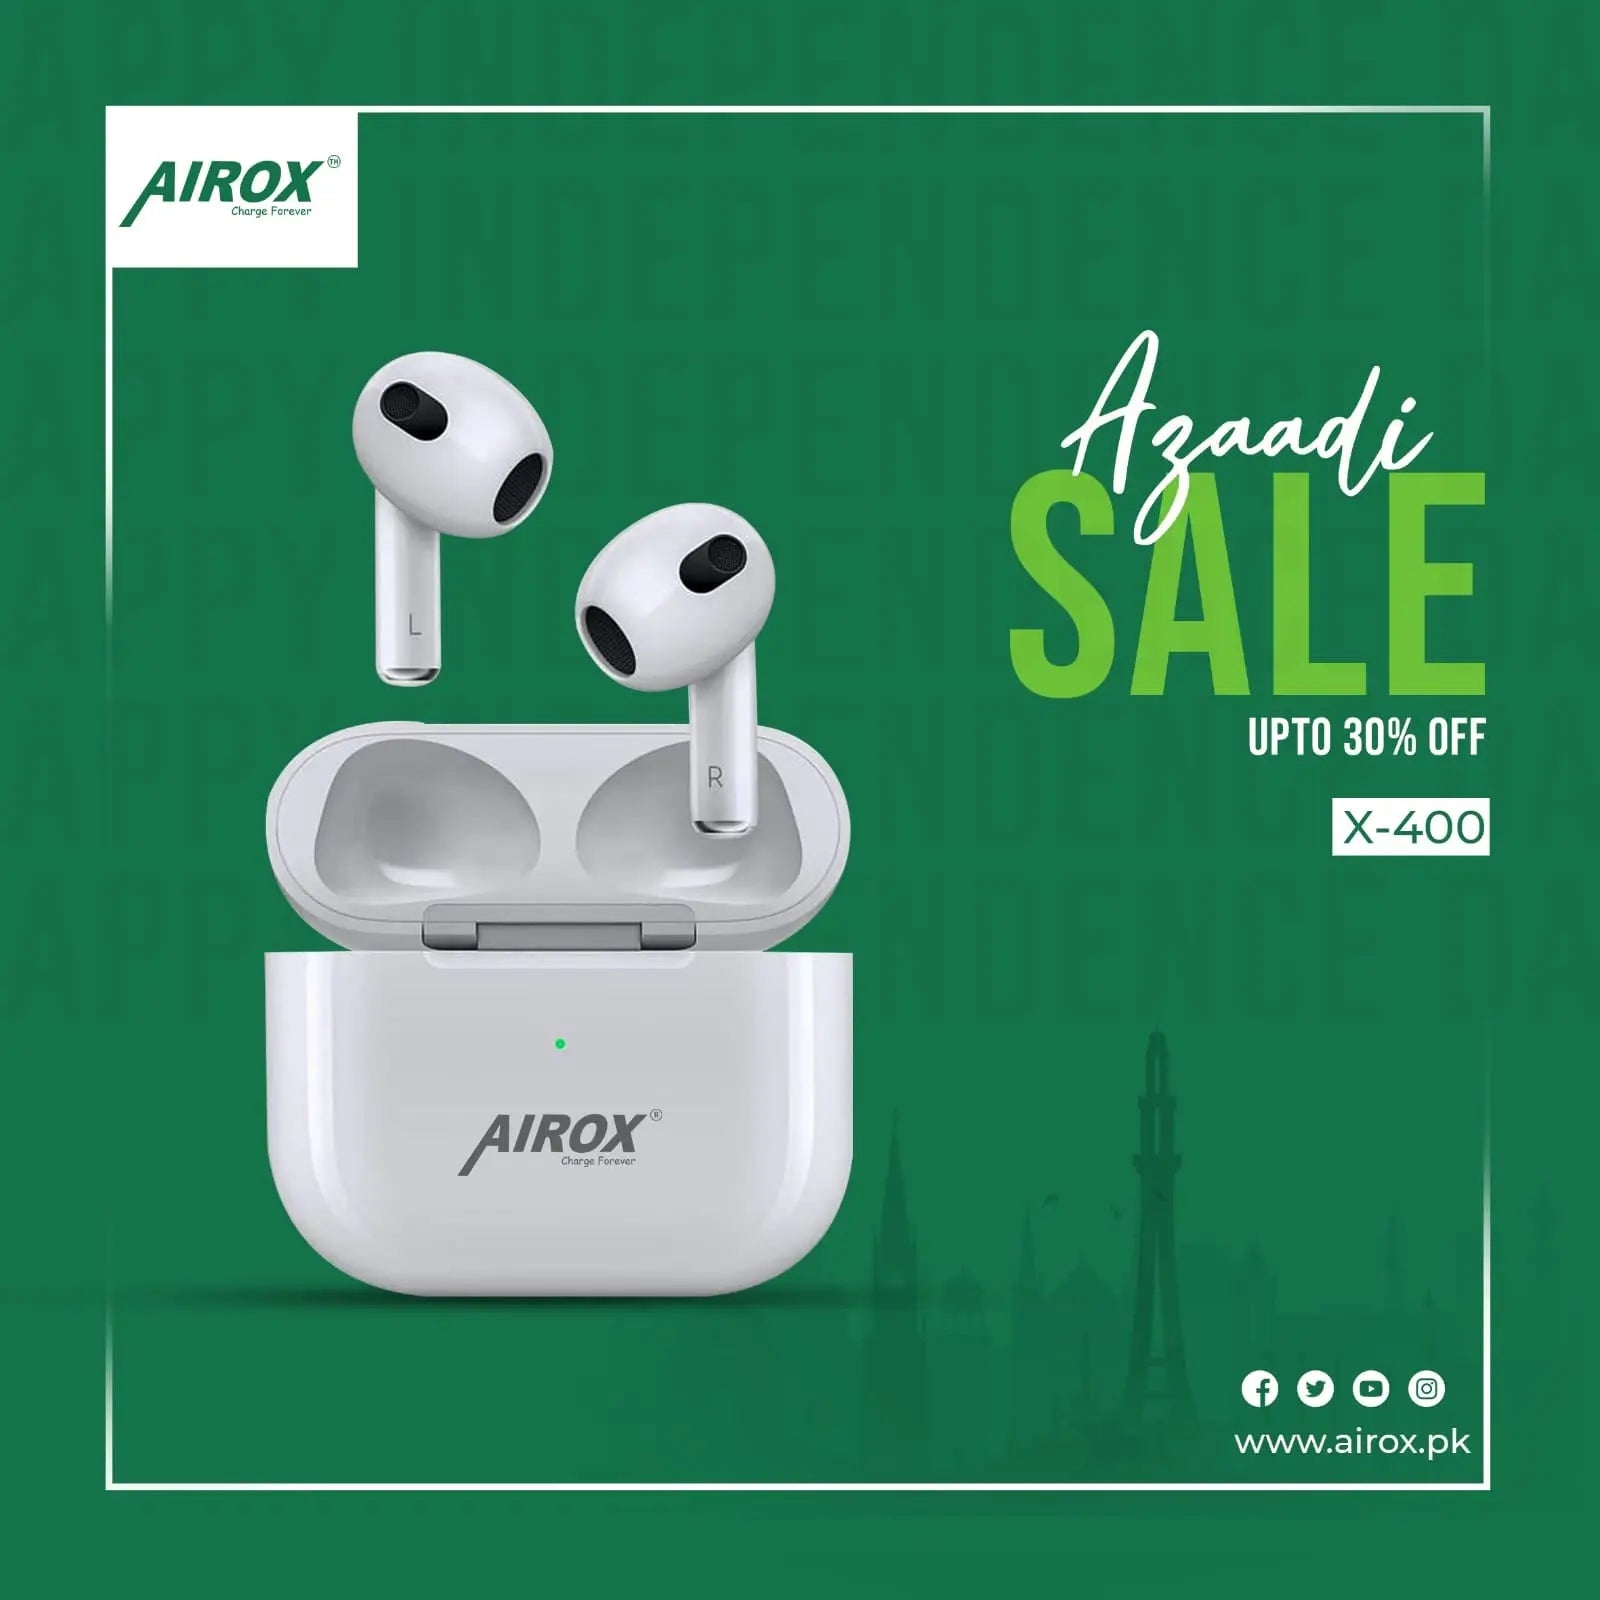 Airox x400 Airpods Pro 3rd Gen Premium Quality Wireless Earbuds Airox.pk